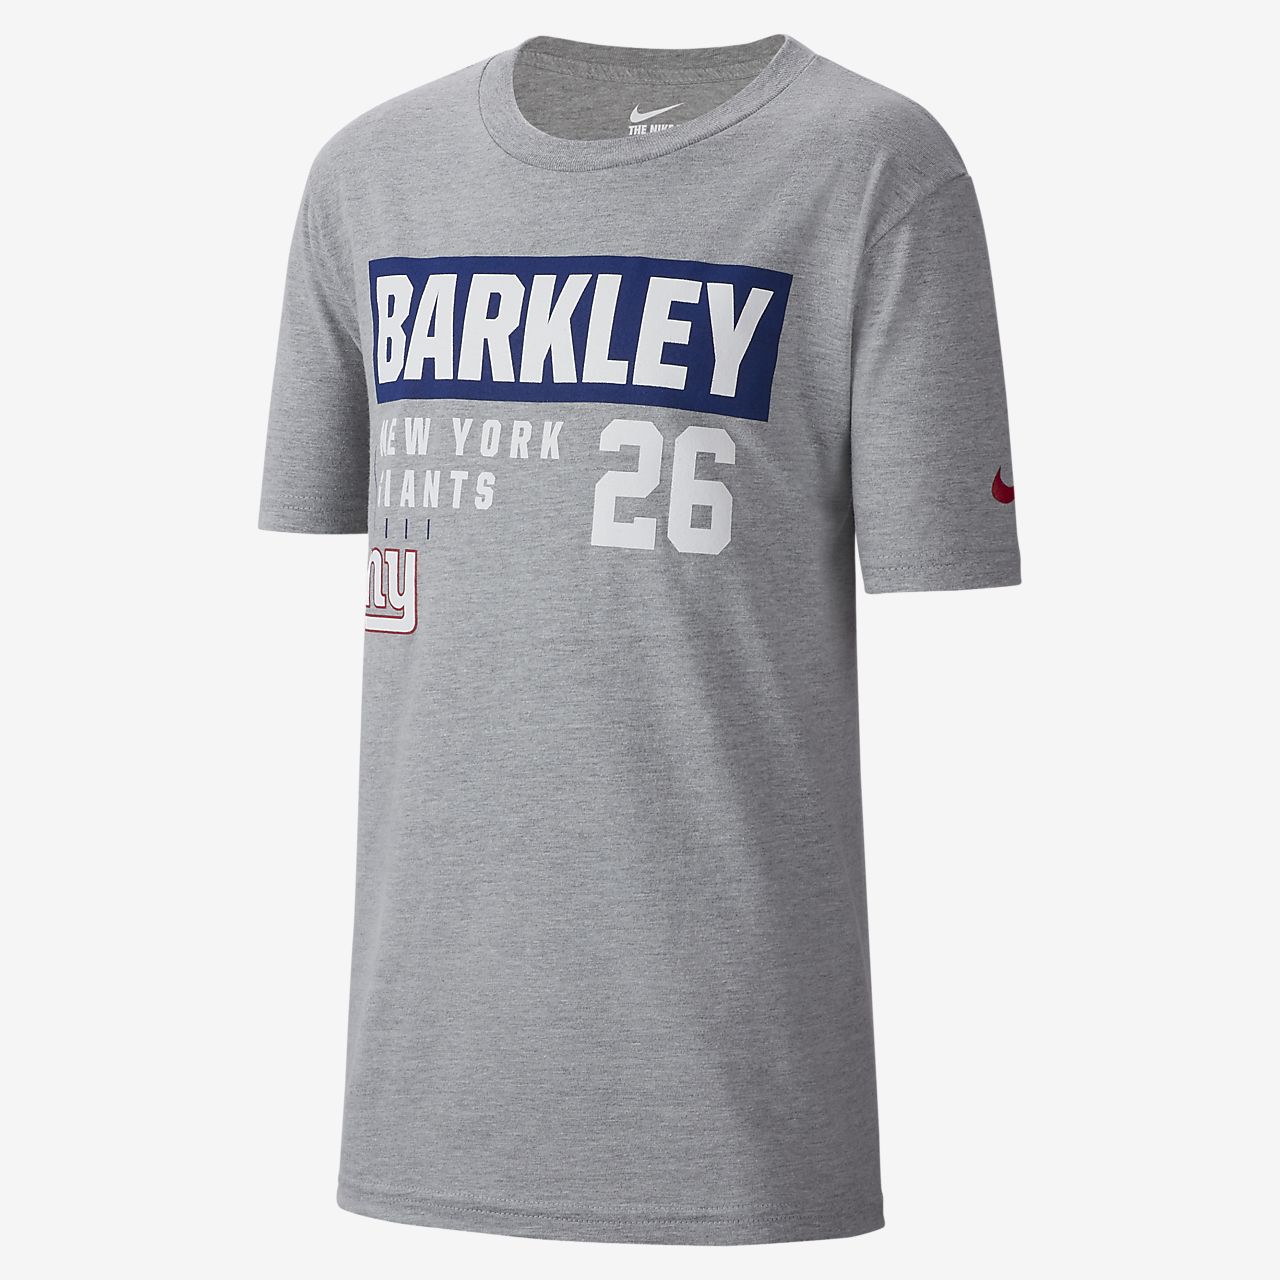 NFL New York Giants (Saquon Barkley) Big Kids' (Boys') T-Shirt. Nike.com